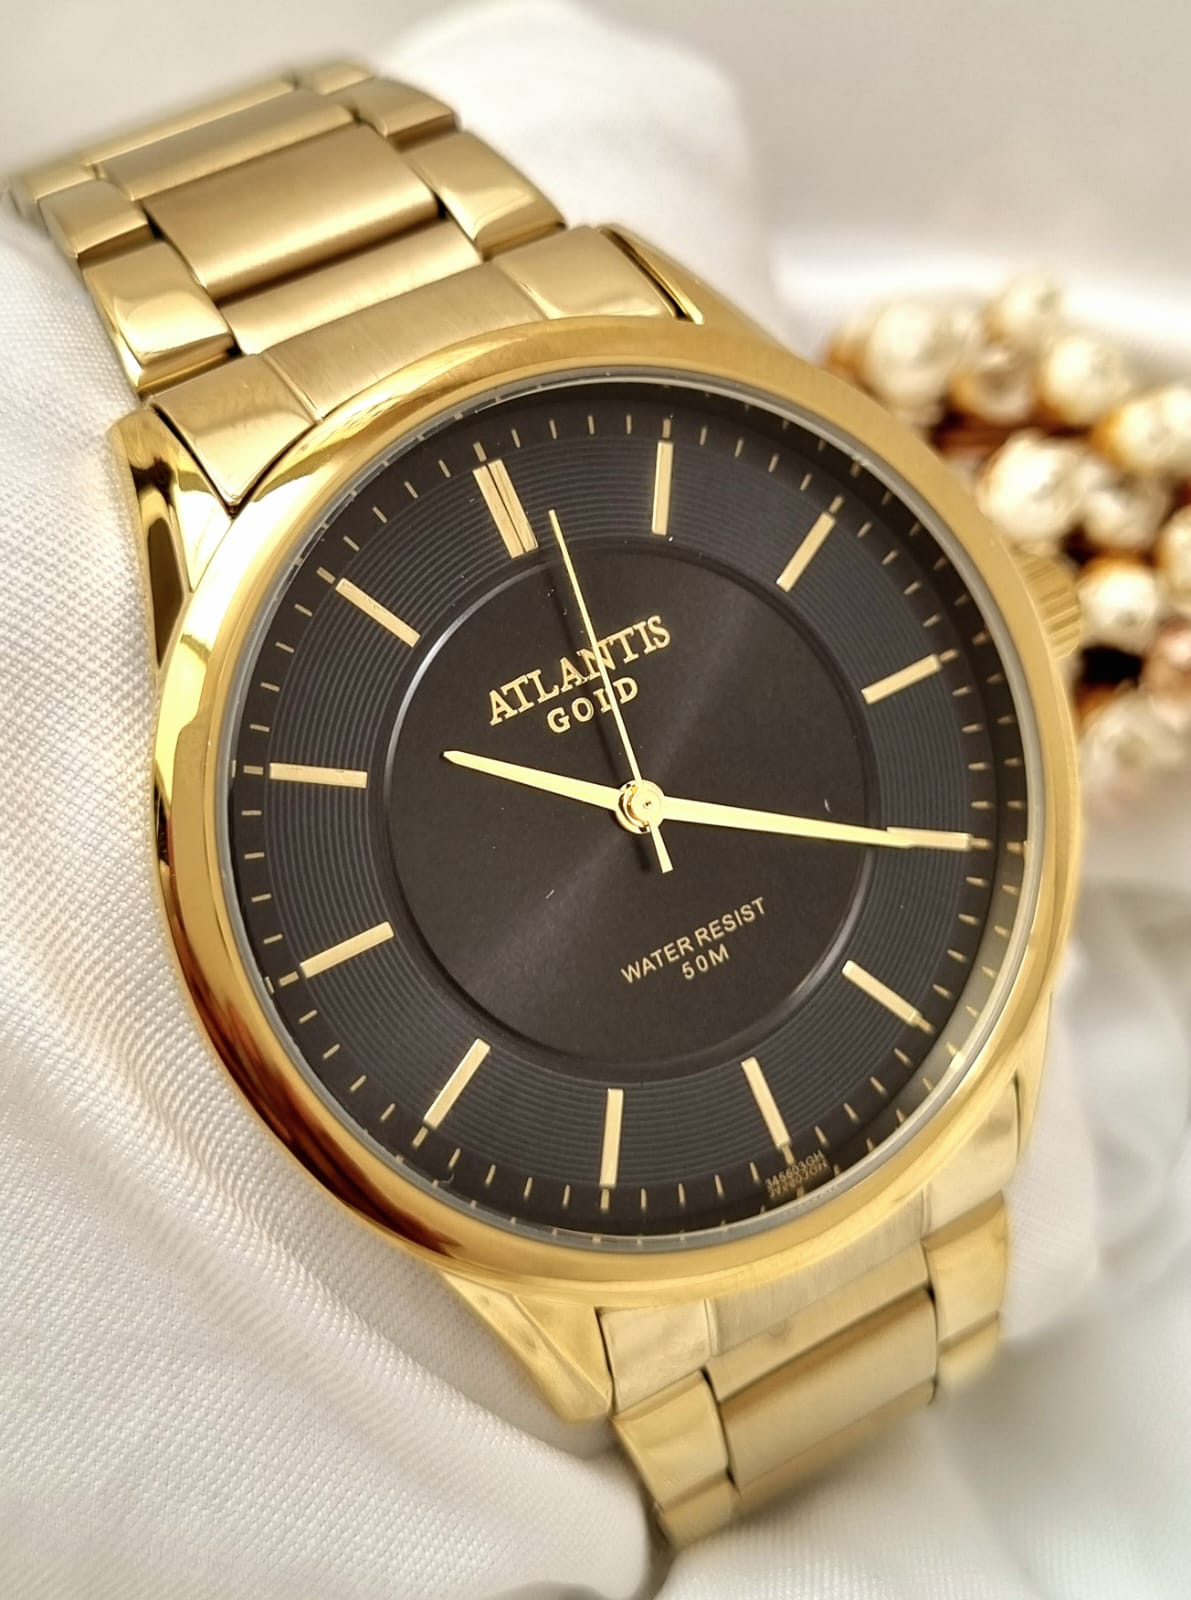 Relógio Banhado a Ouro Atlantis Gold G3456